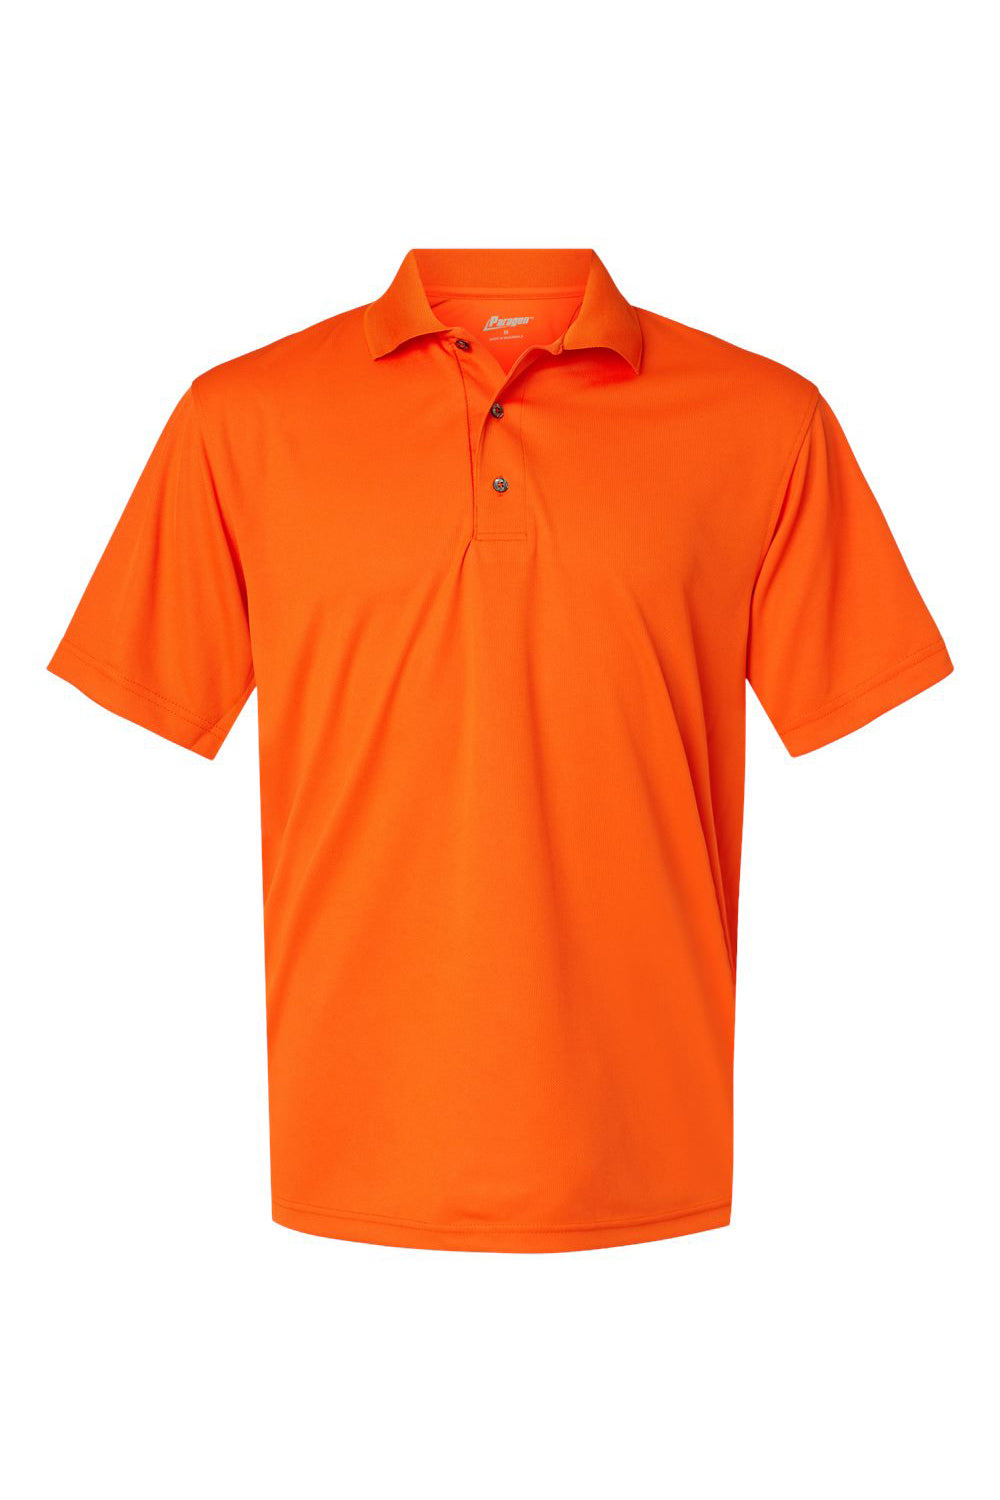 Paragon 100 Mens Saratoga Performance Mini Mesh Short Sleeve Polo Shirt Orange Flat Front